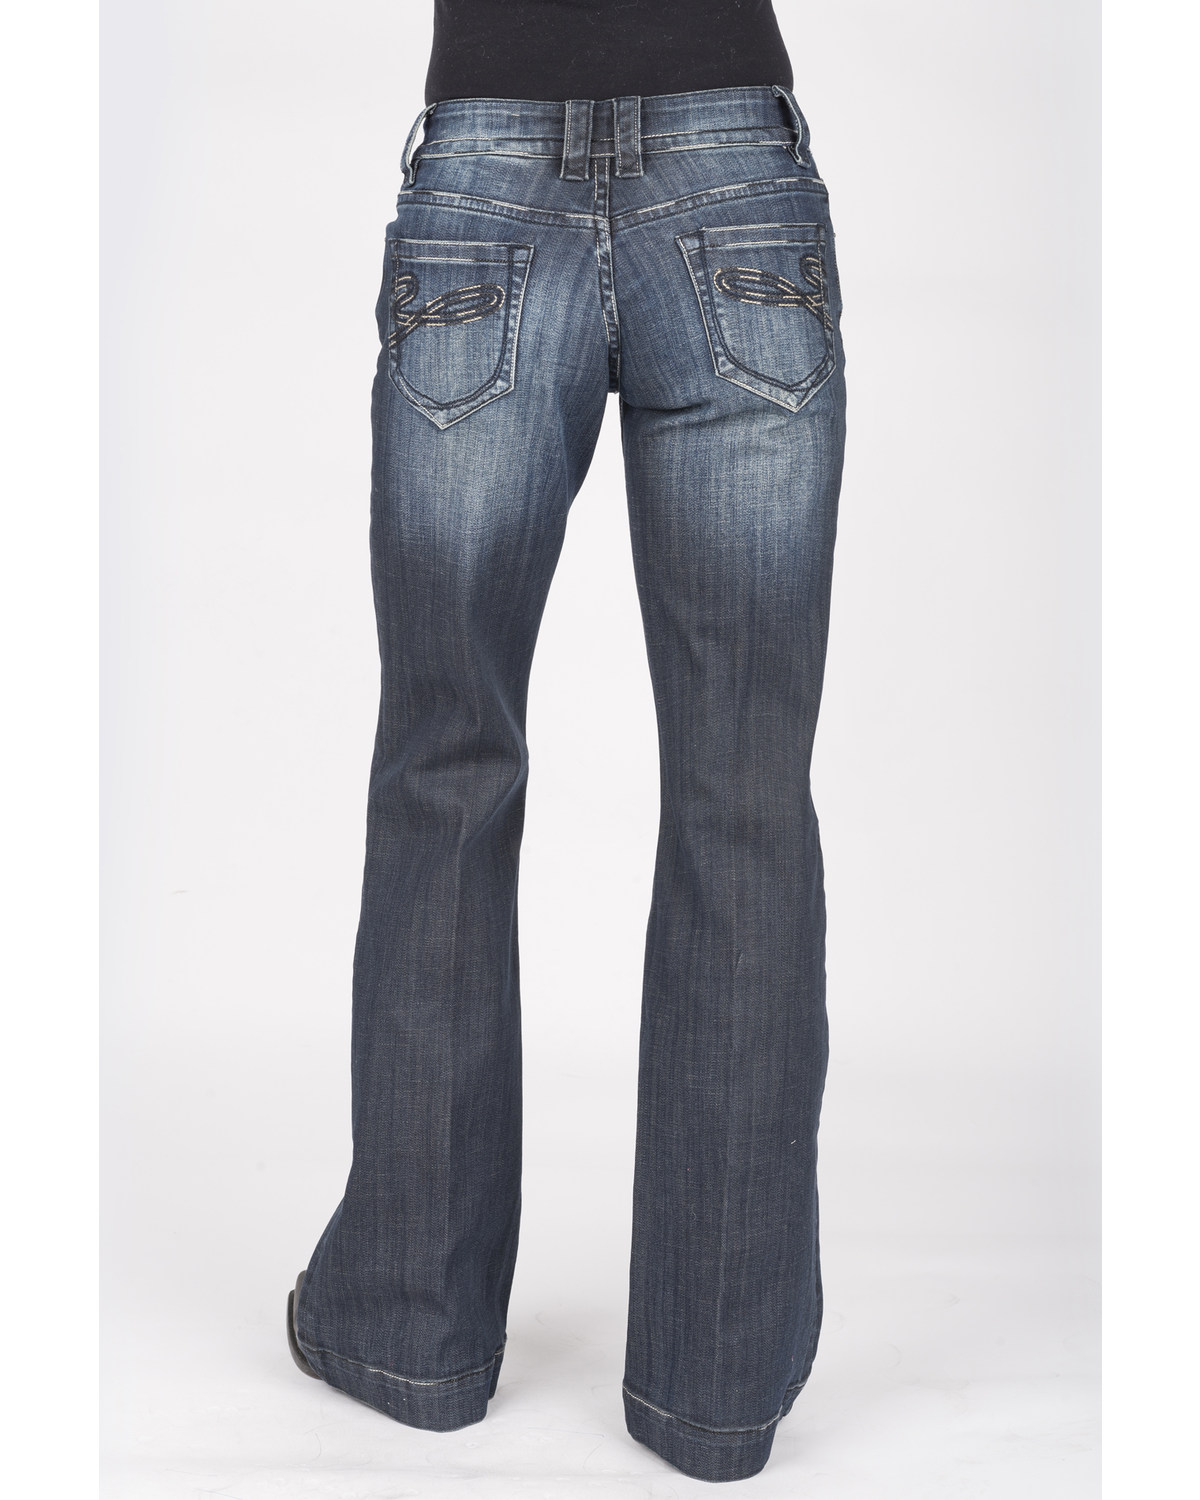 Stetson Women's Dark 214 Trouser Fit Jeans | Boot Barn